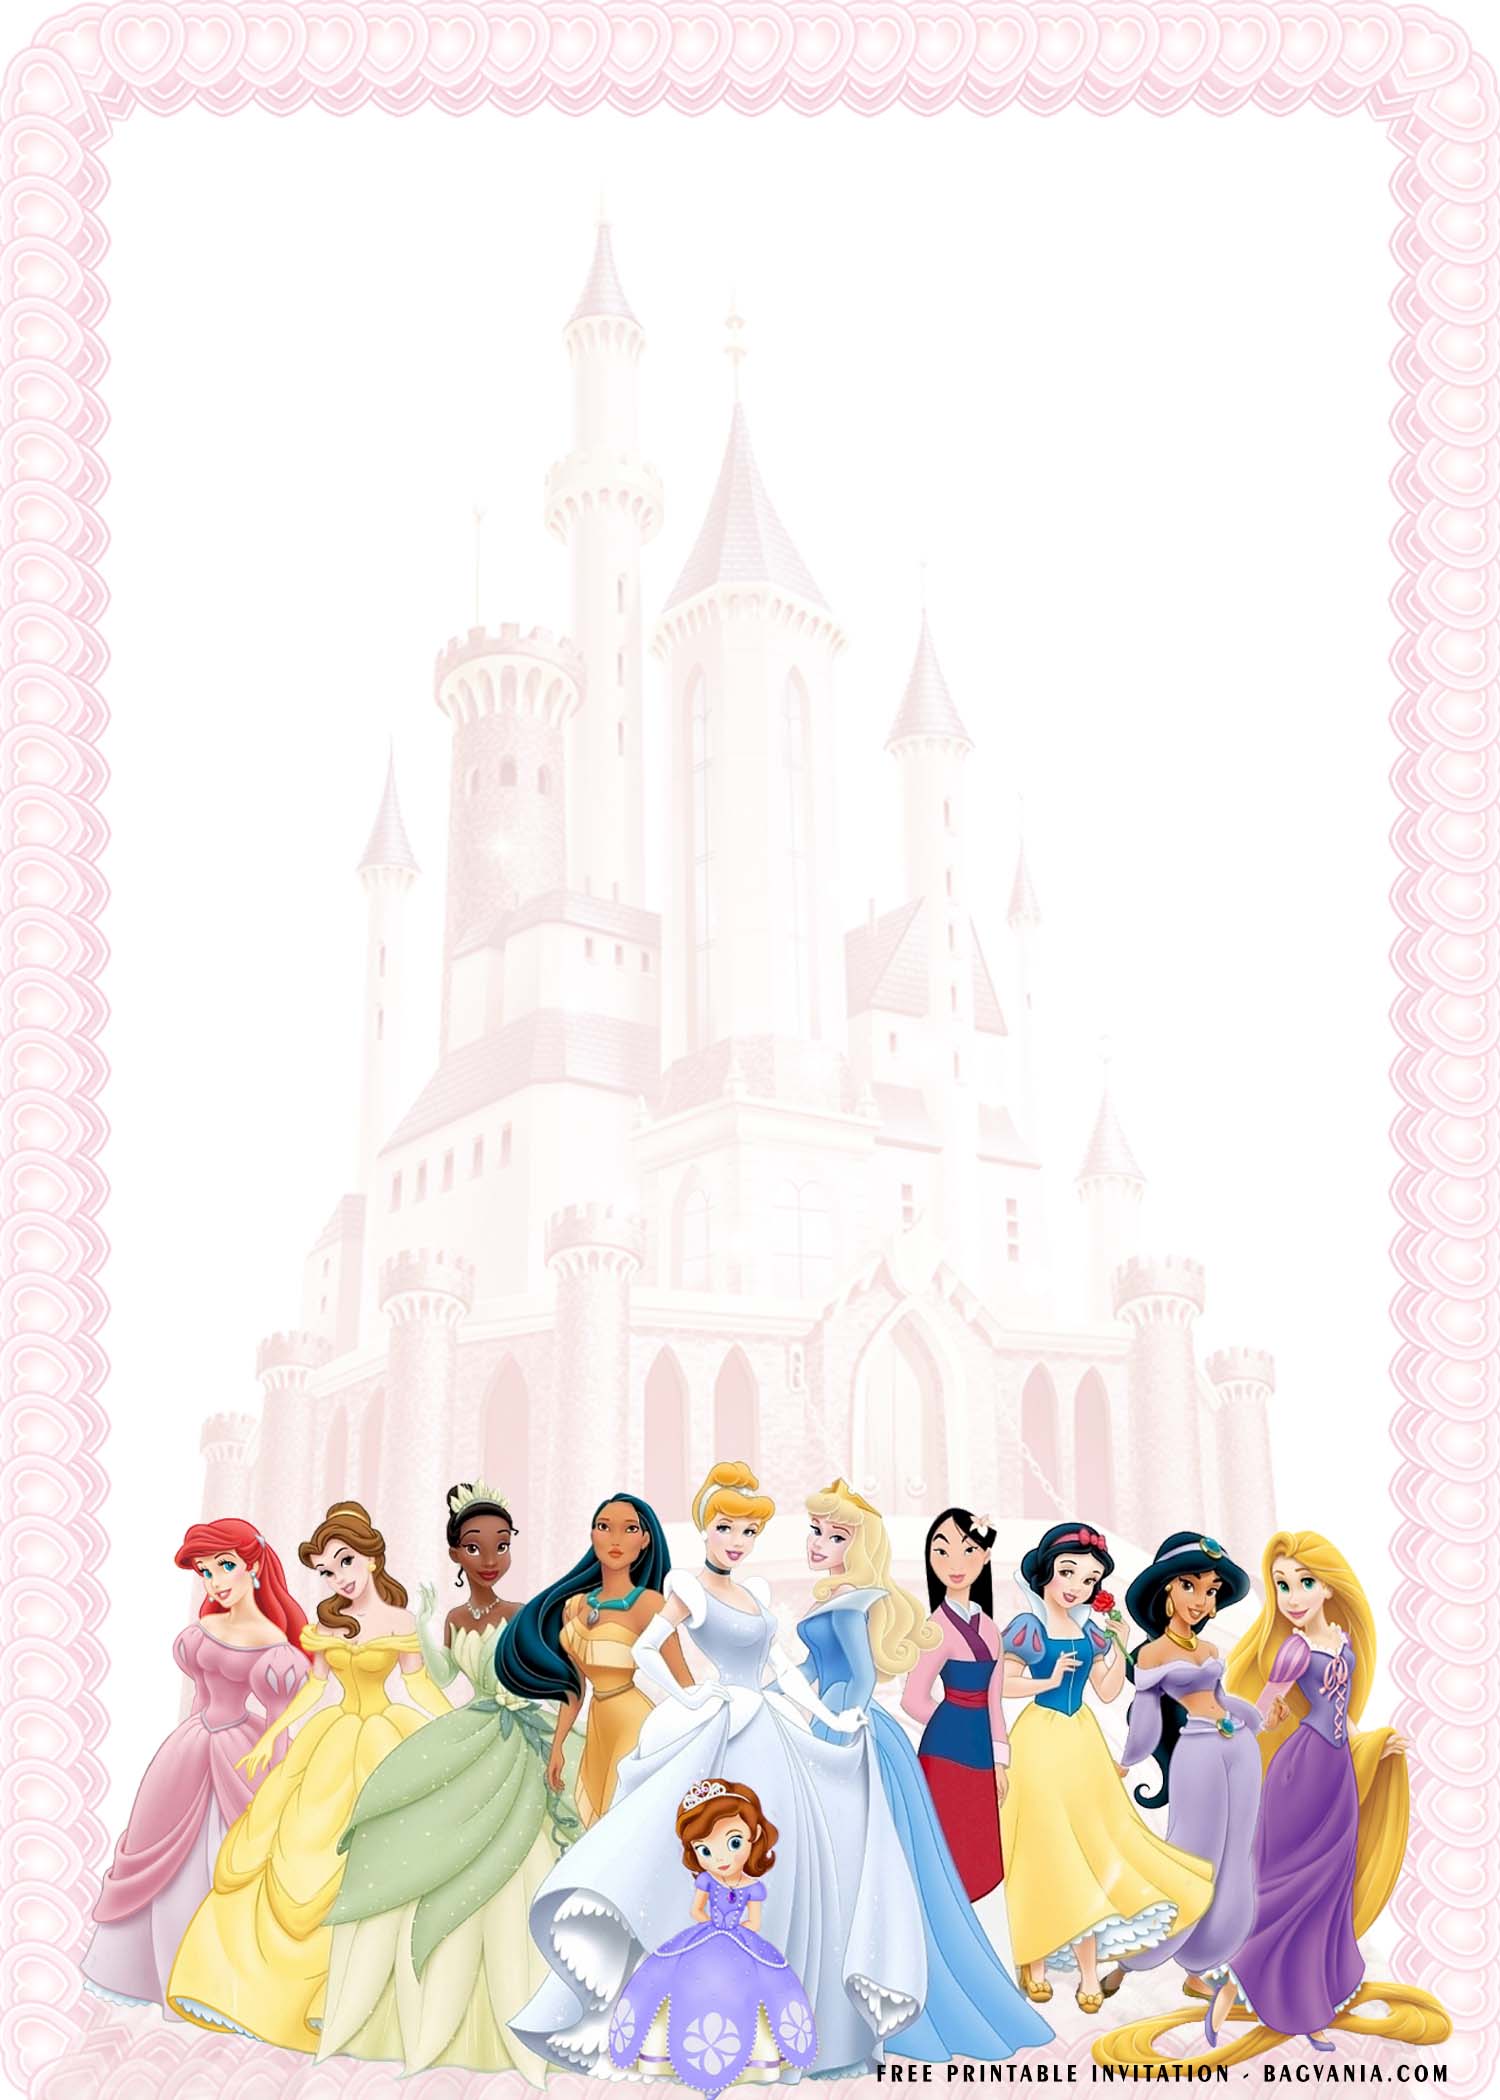 Free Printable Cute Disney Princess Birthday Invitation Templates Free Printable Birthday Invitation Templates Bagvania